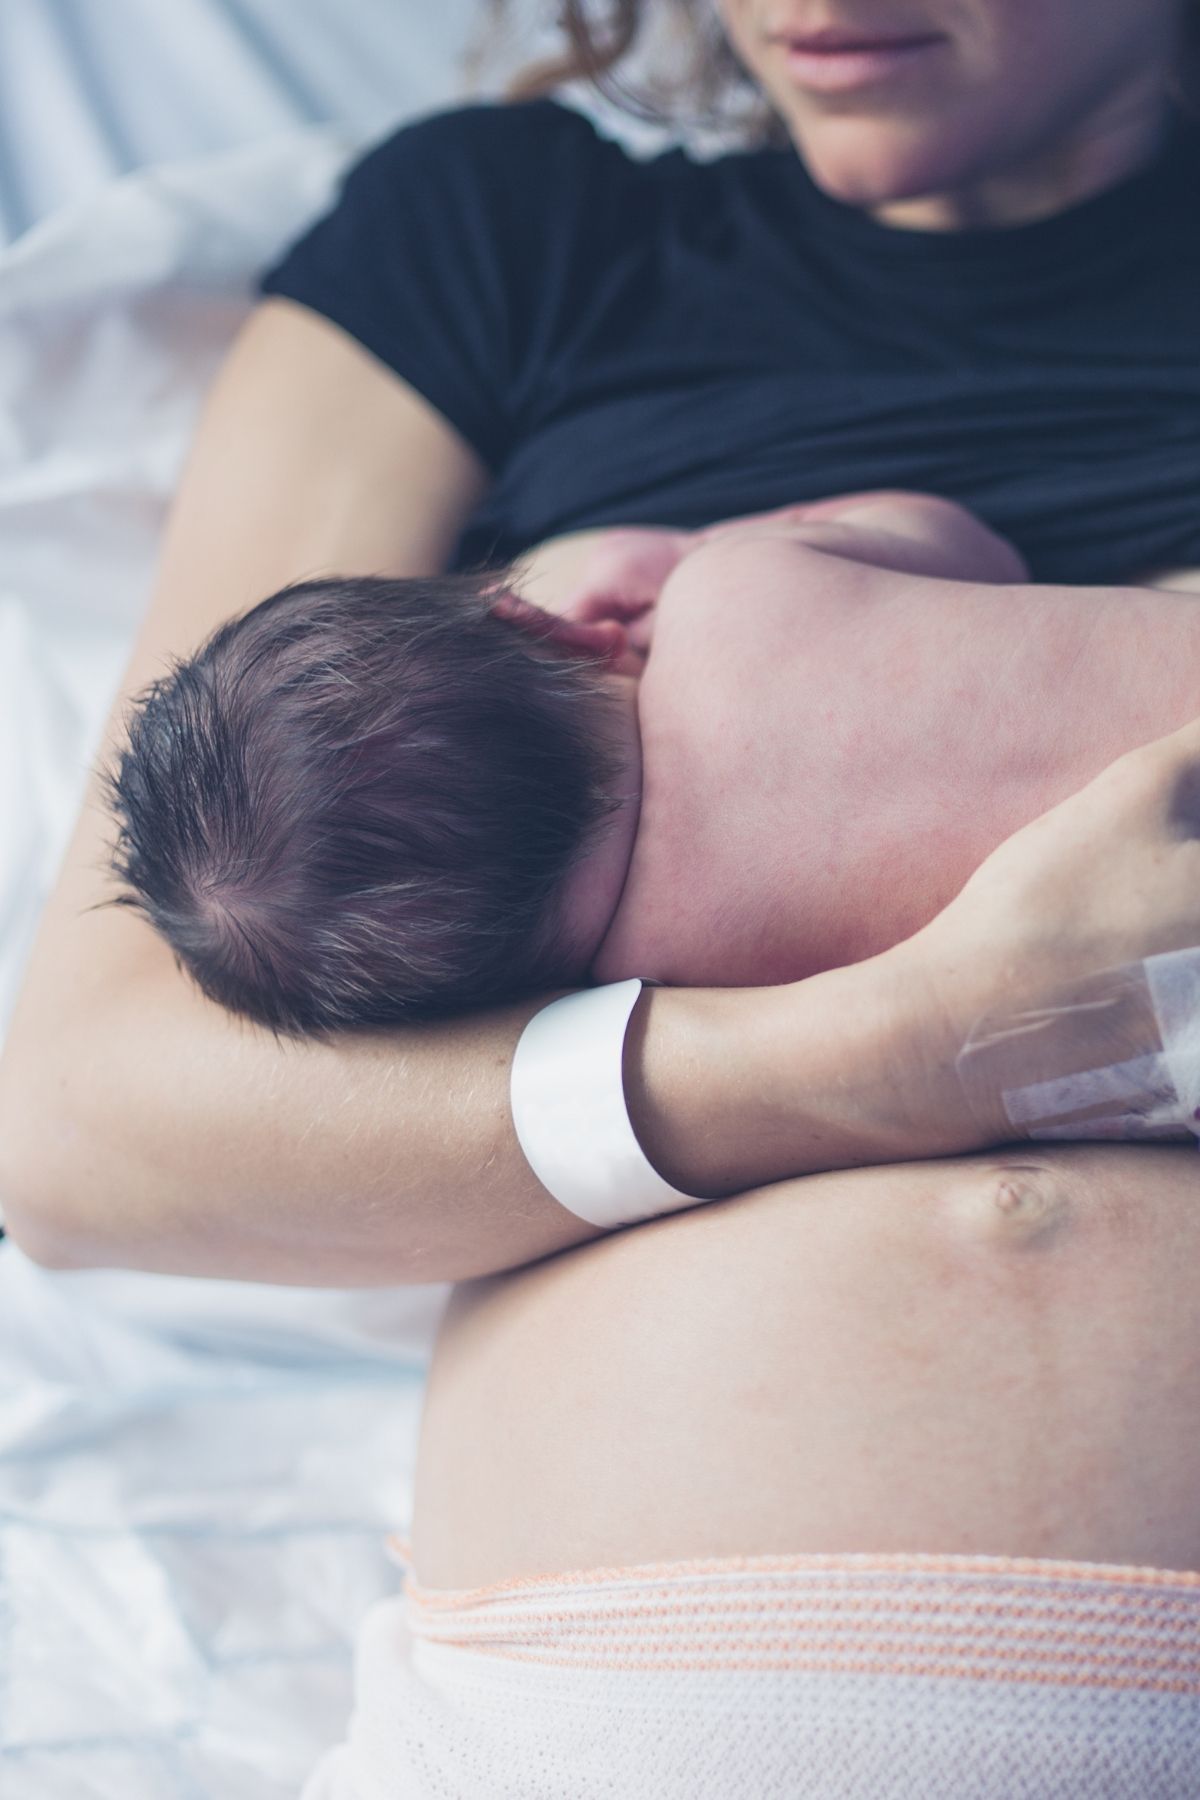 New mom breastfeeds newborn in hospital bed.